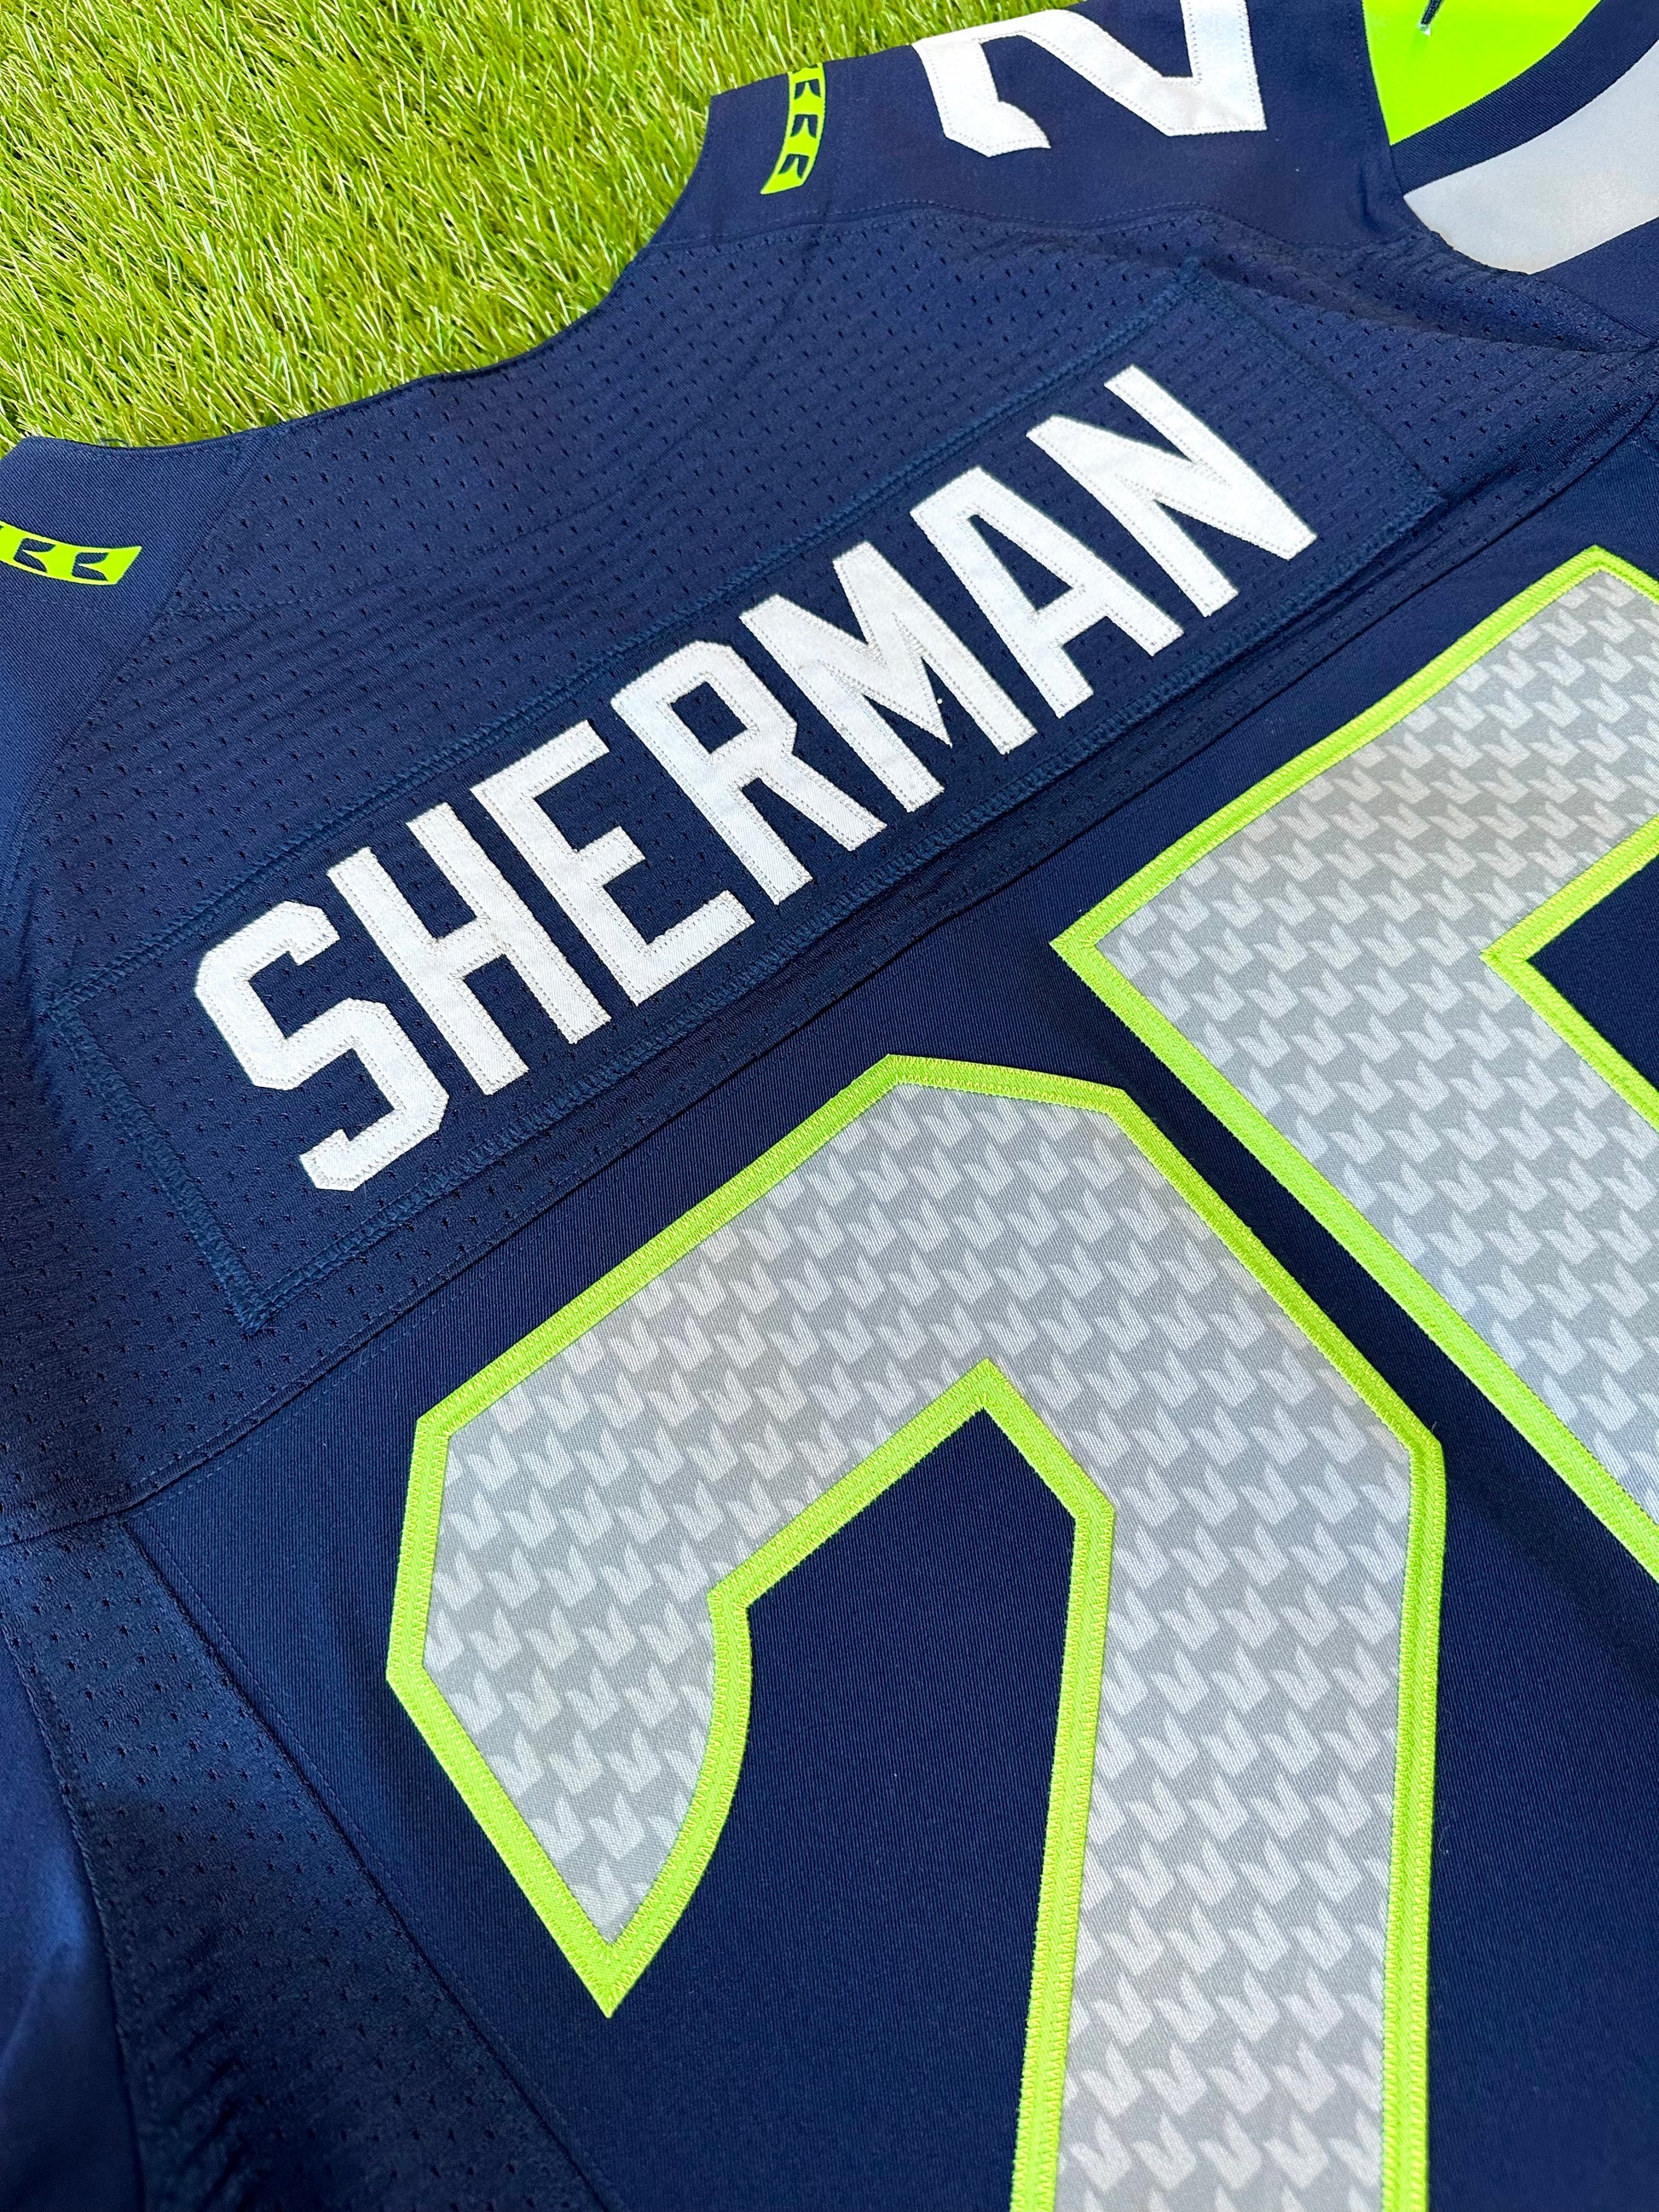 Seattle Seahawks Richard Sherman 2014 Super Bowl XLIX NFL Football Jer –  Grail Snipes